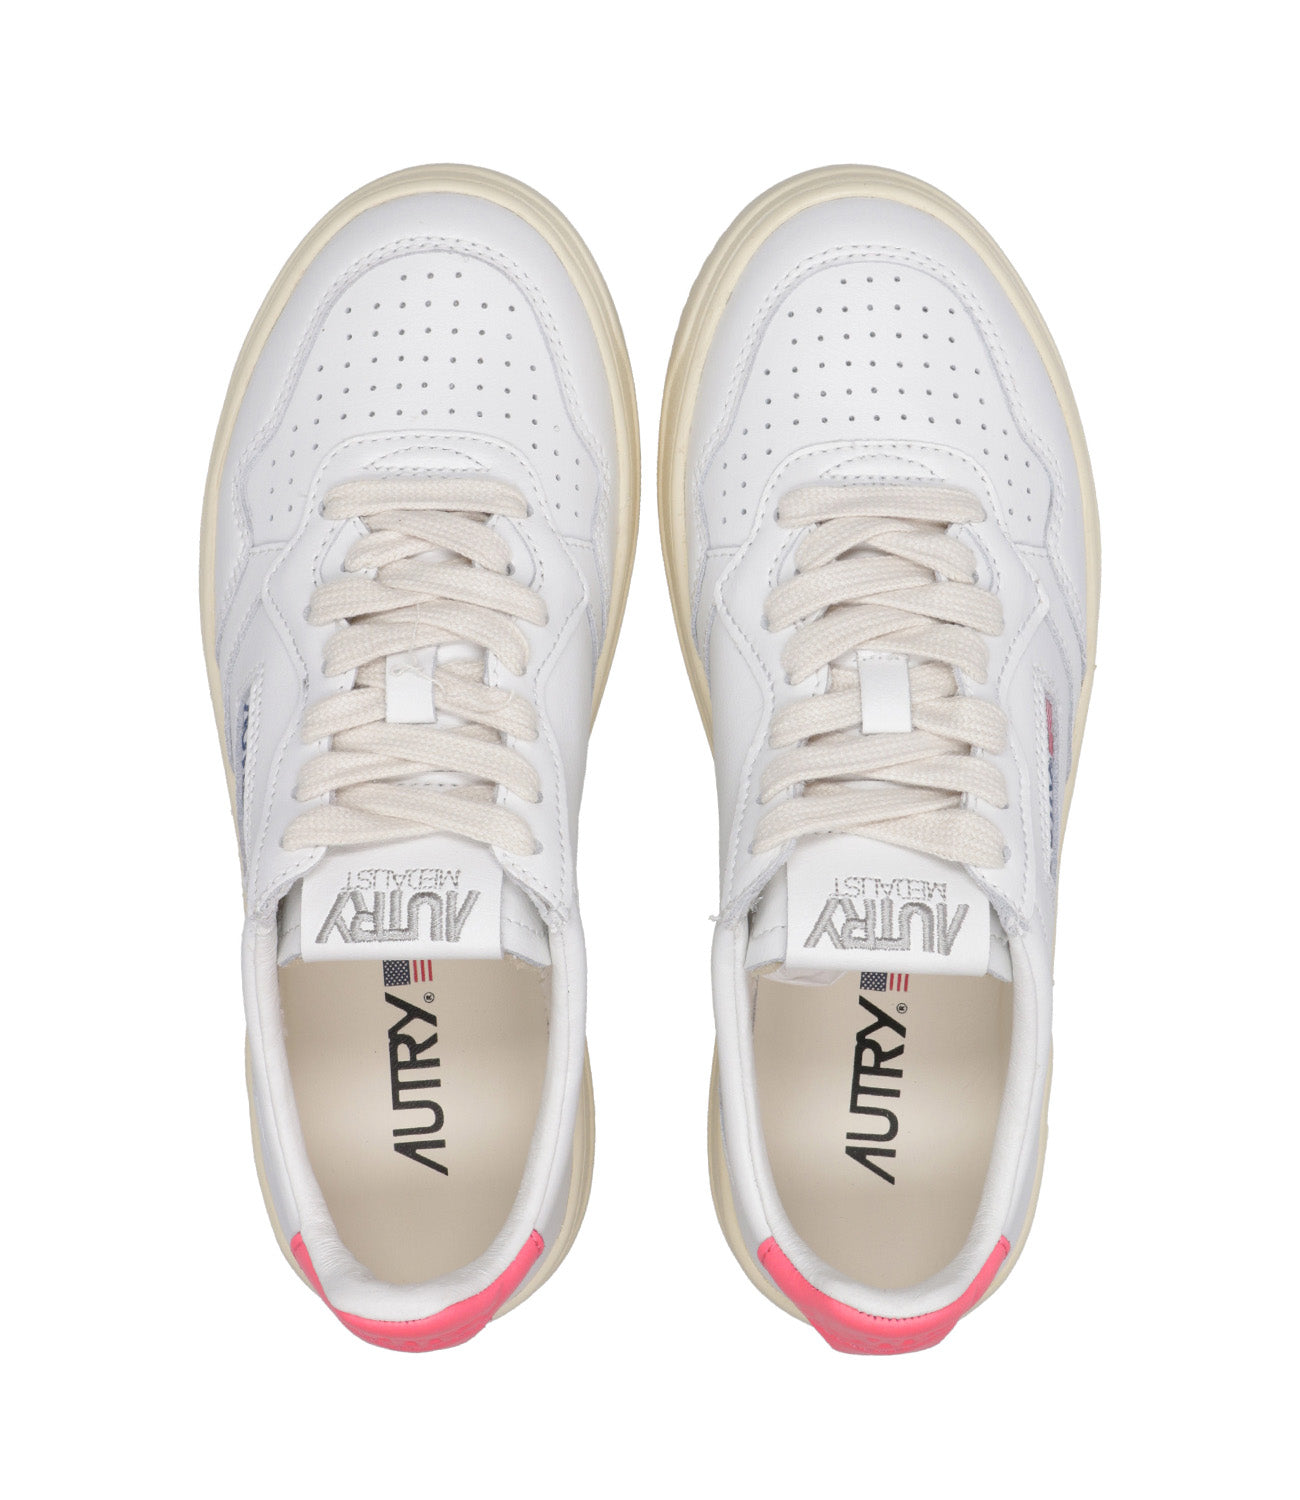 Autry | Sneakers Medalist Low Bianco e Corallo